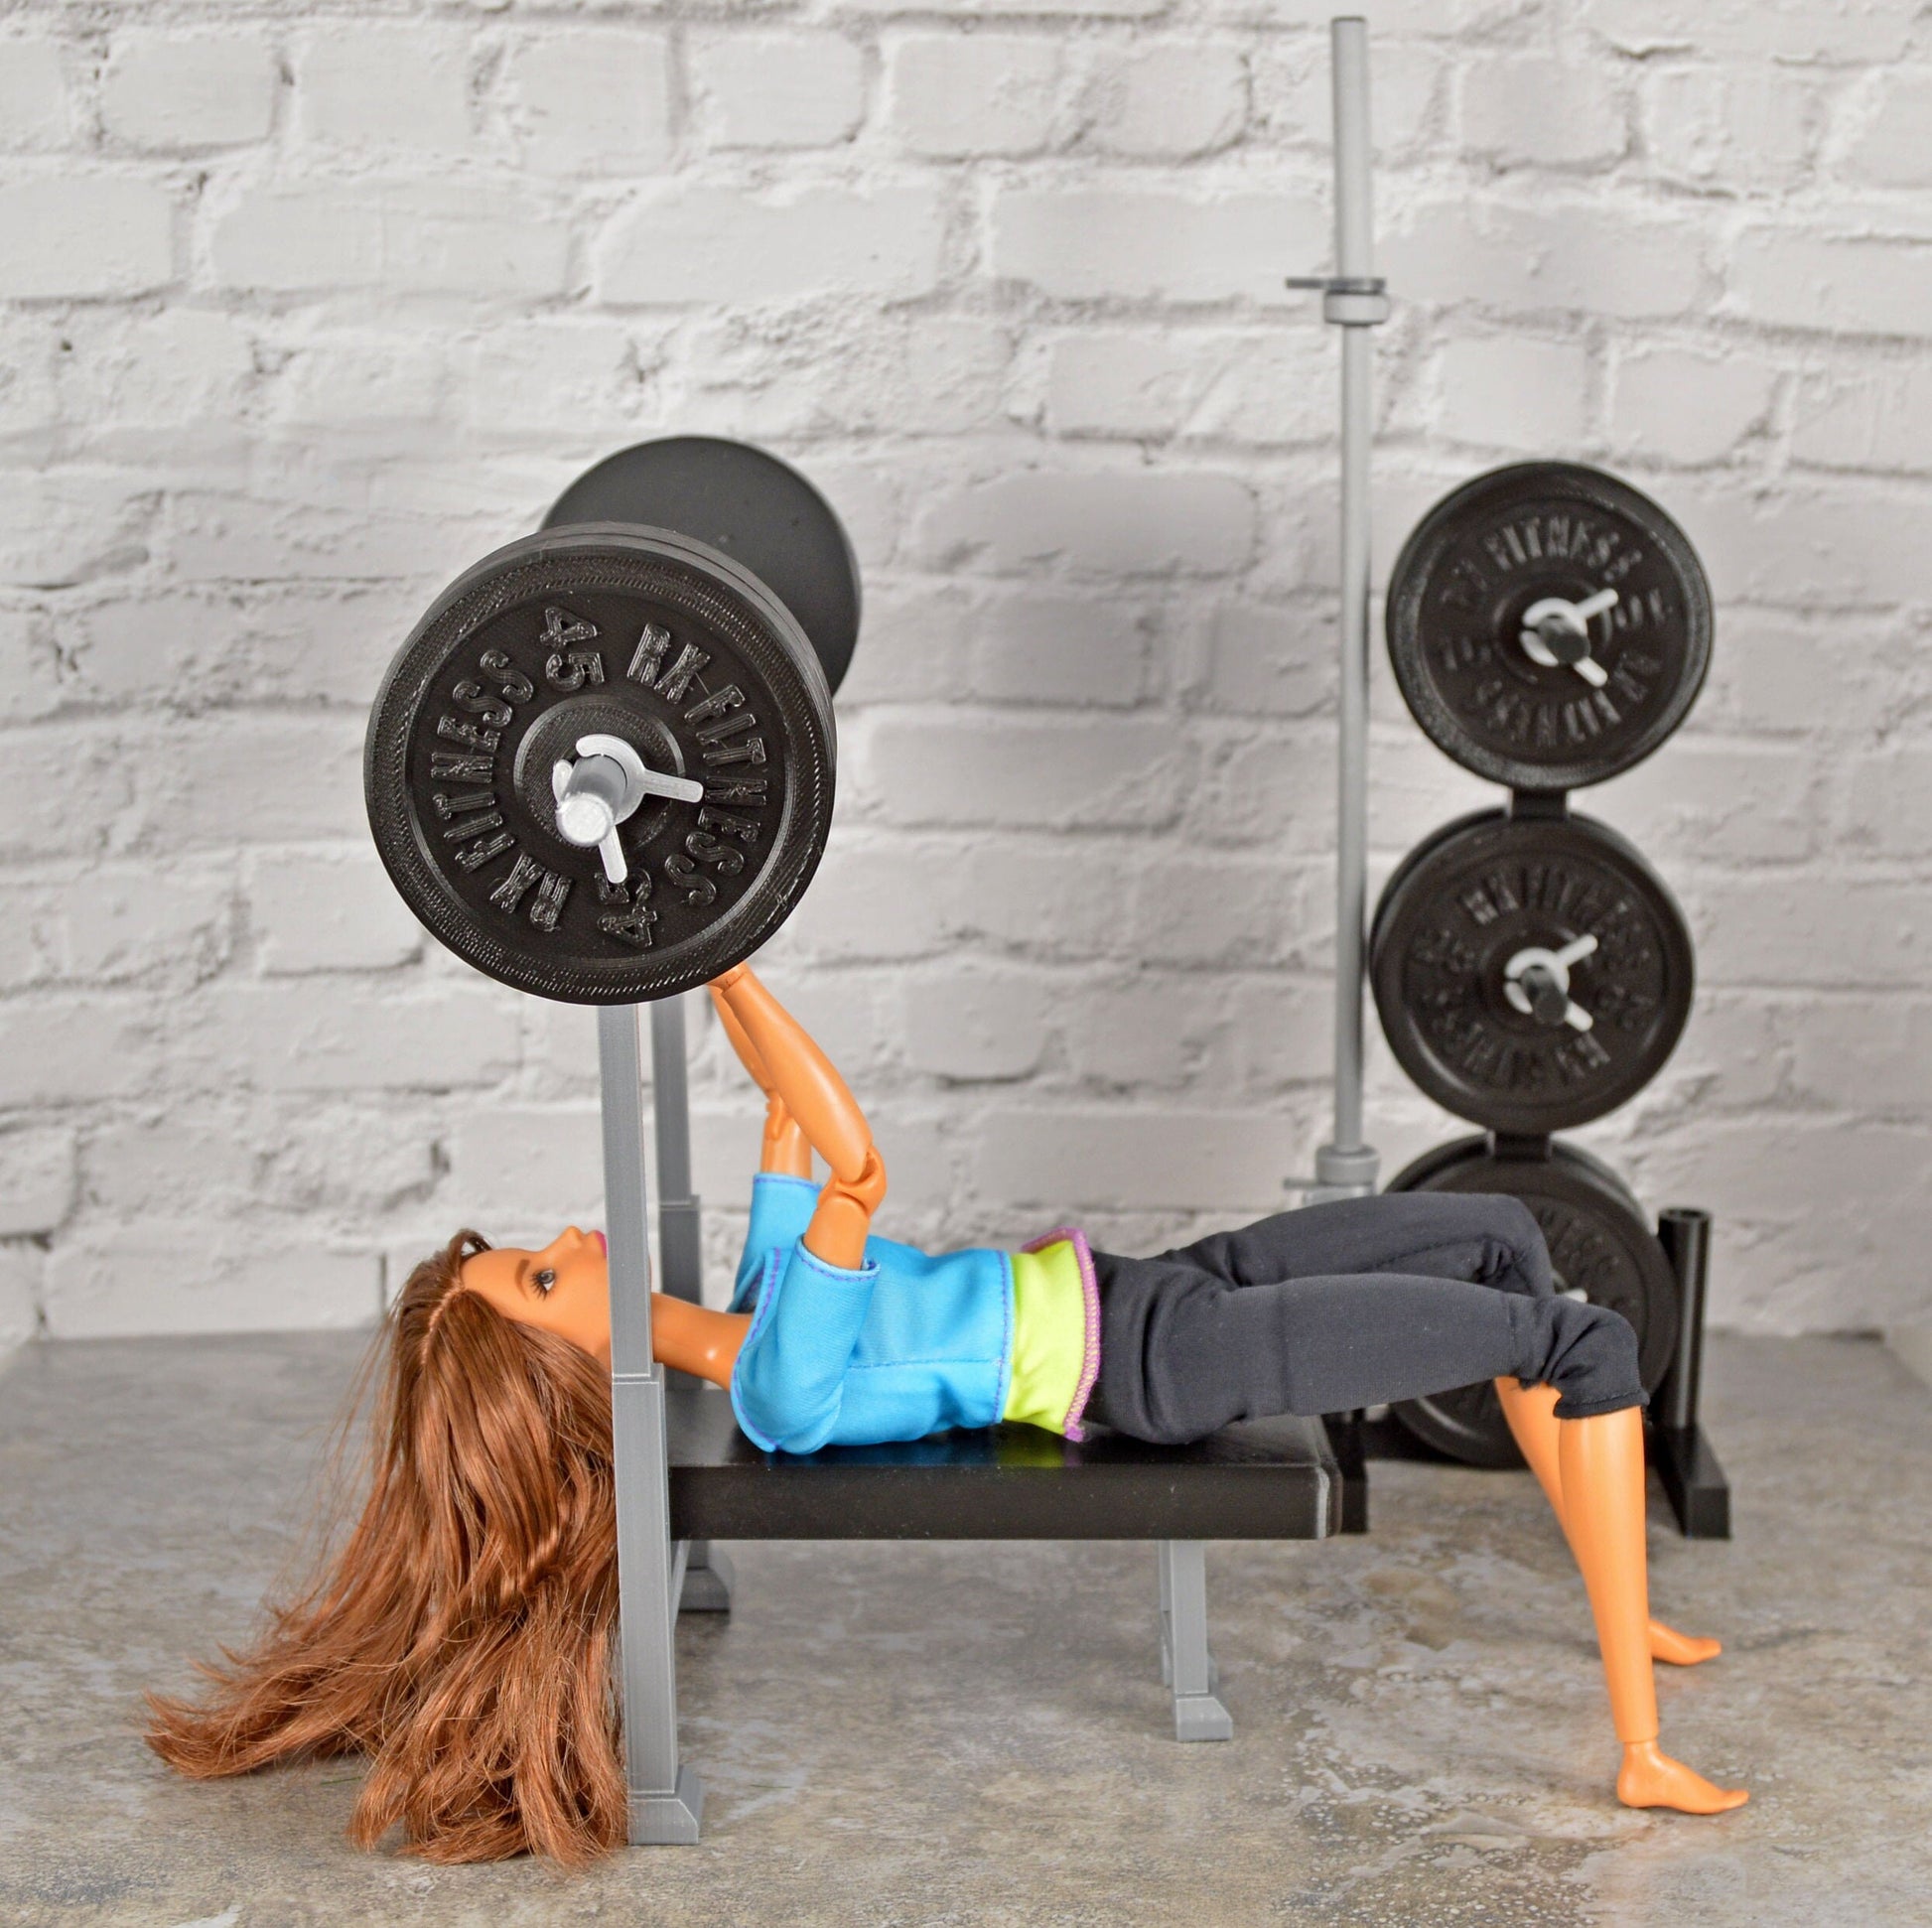 1/6 Scale Gym Set, Miniature Gym Equipment, Exercise Equipment, 1